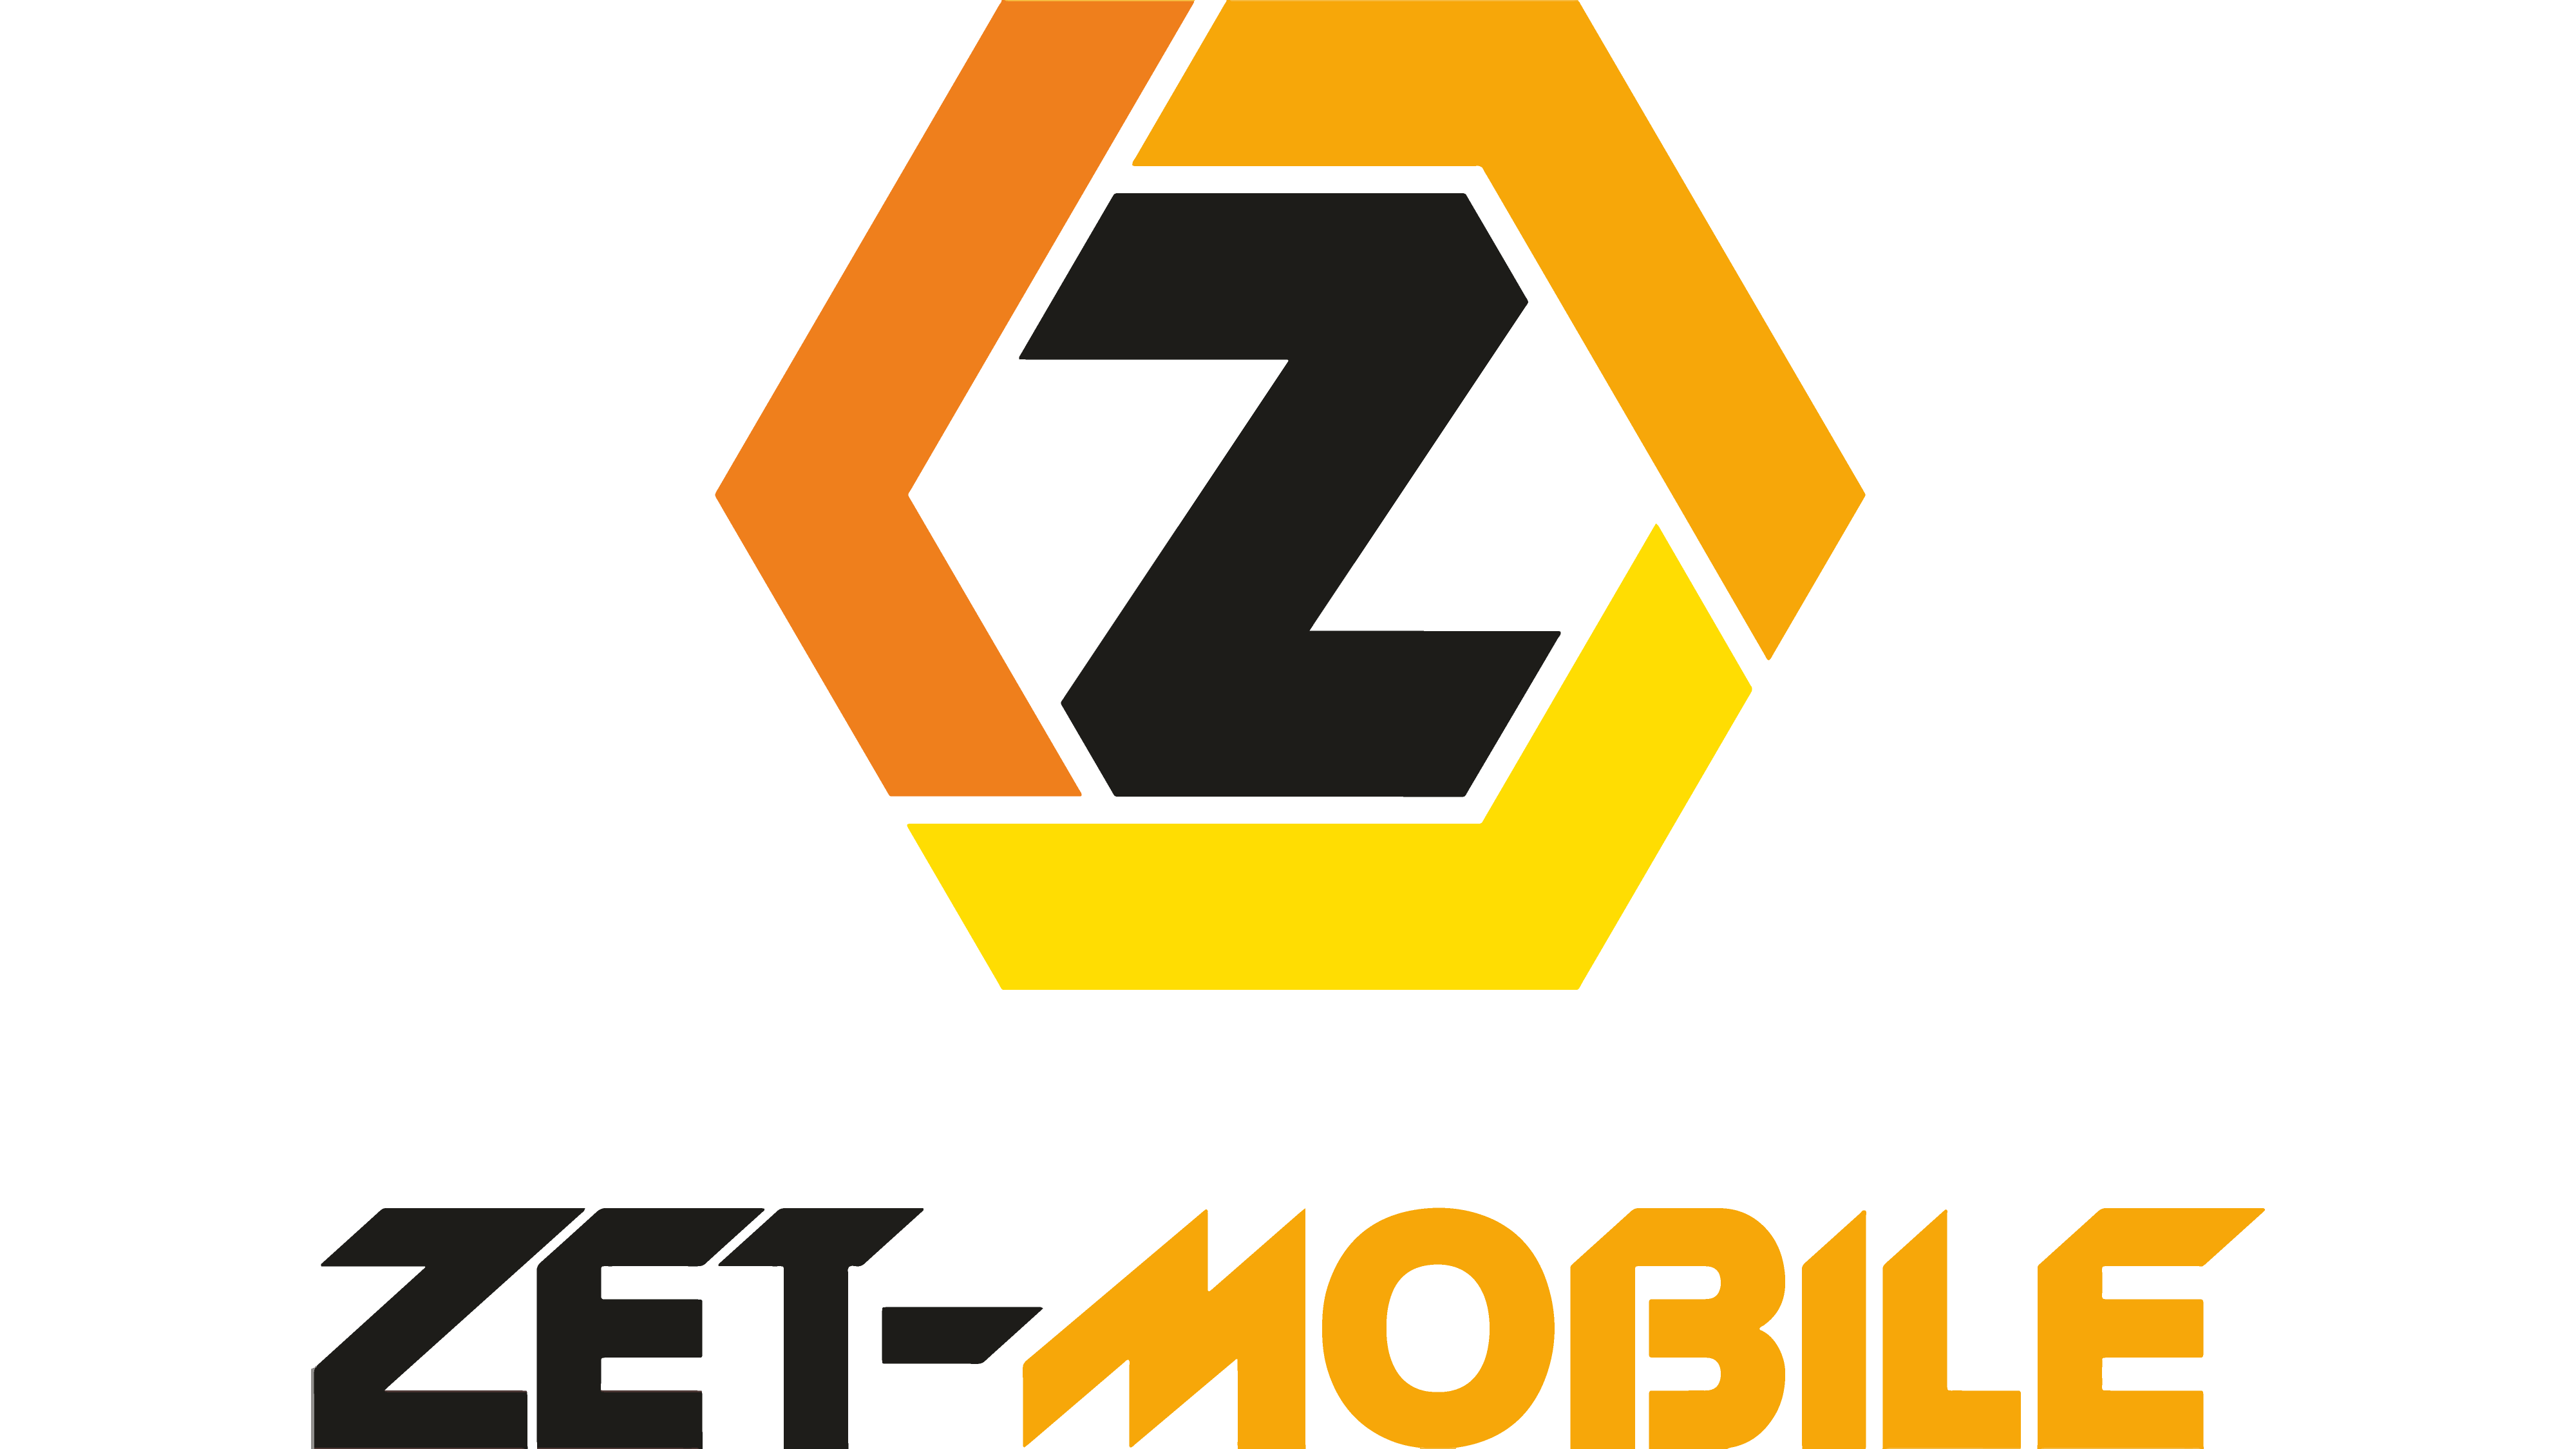 Zet top. Zet mobile. Zet mobile логотип. Зет мобайл Таджикистан. Zet mobile.TJ.